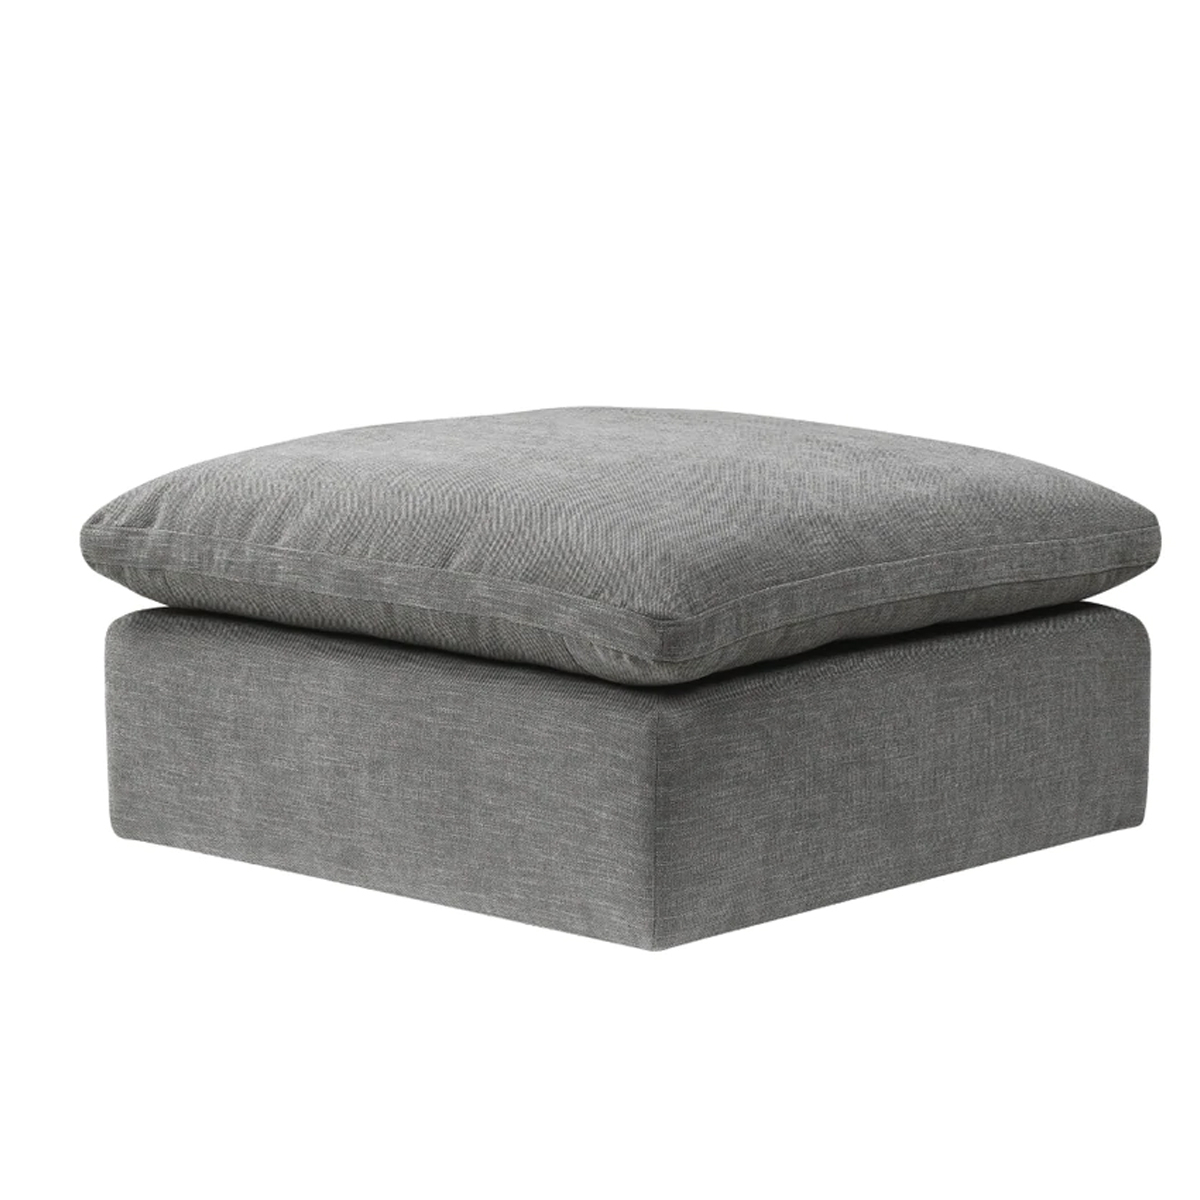 Shar 37 Inch Square Ottoman, Removable Pillow Top Cushion, Gray- Saltoro Sherpi